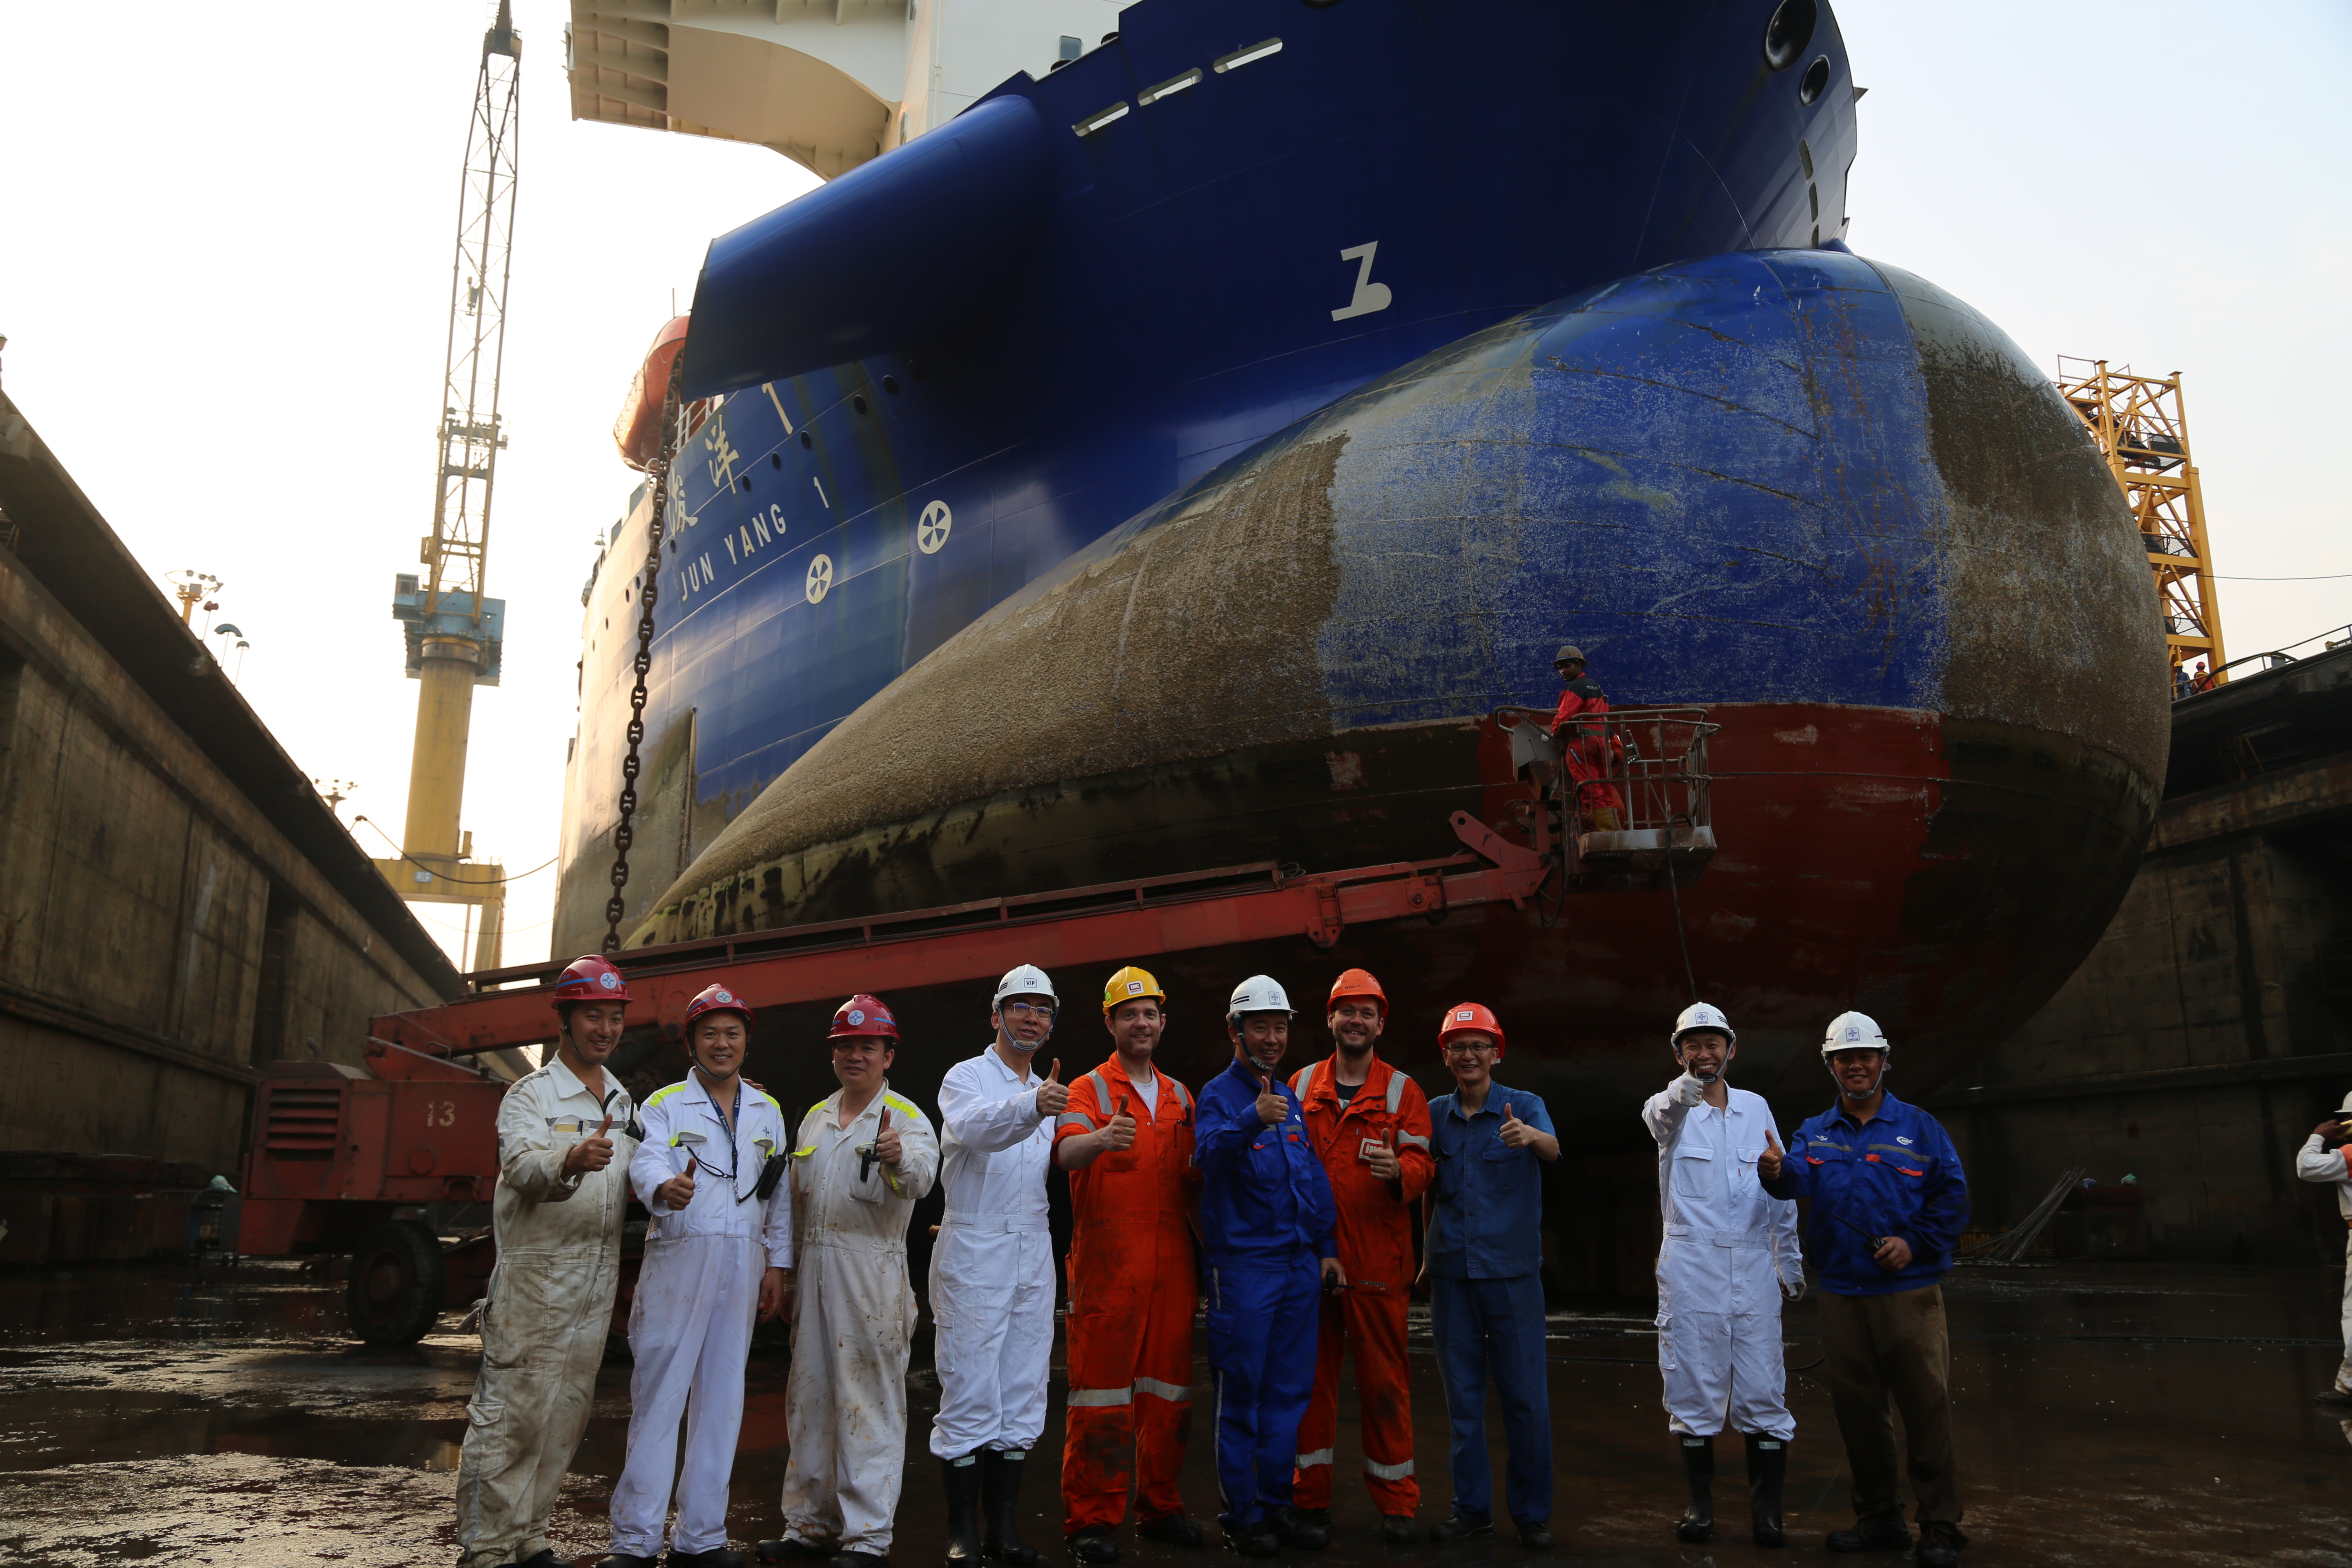 service team in front of dredging vessel